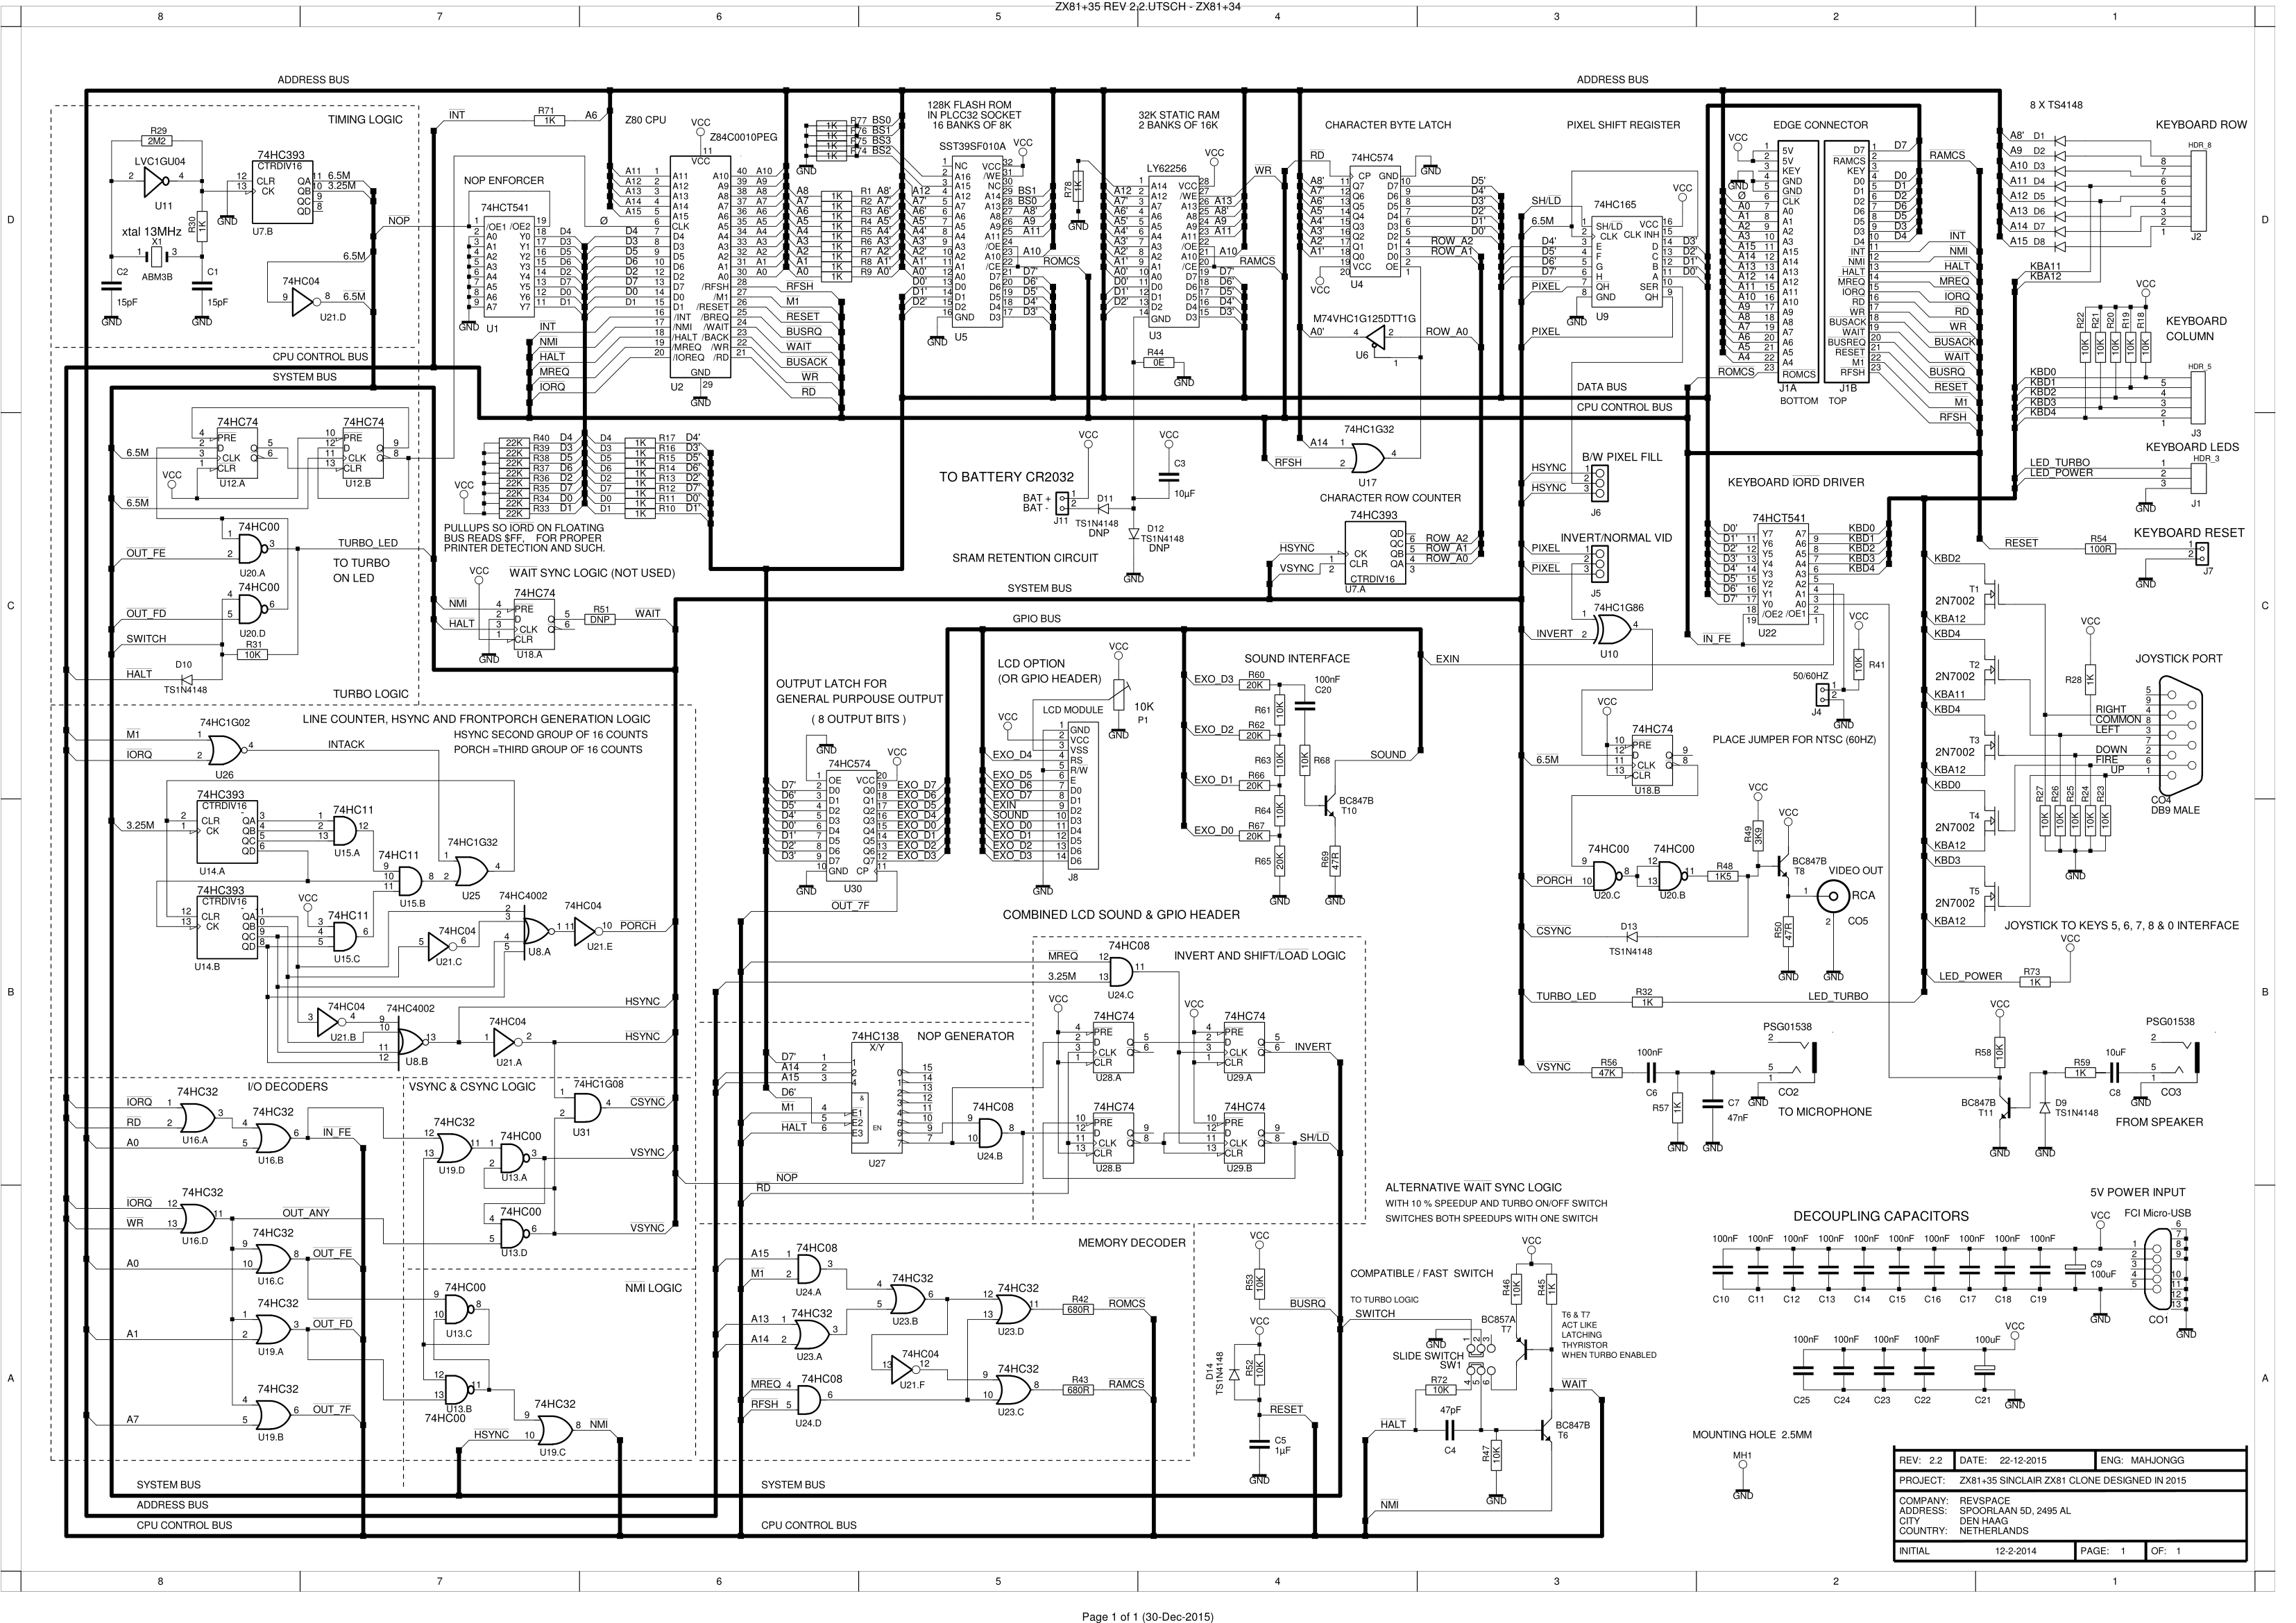 ZX81+35 rev 2.2 schematic.png